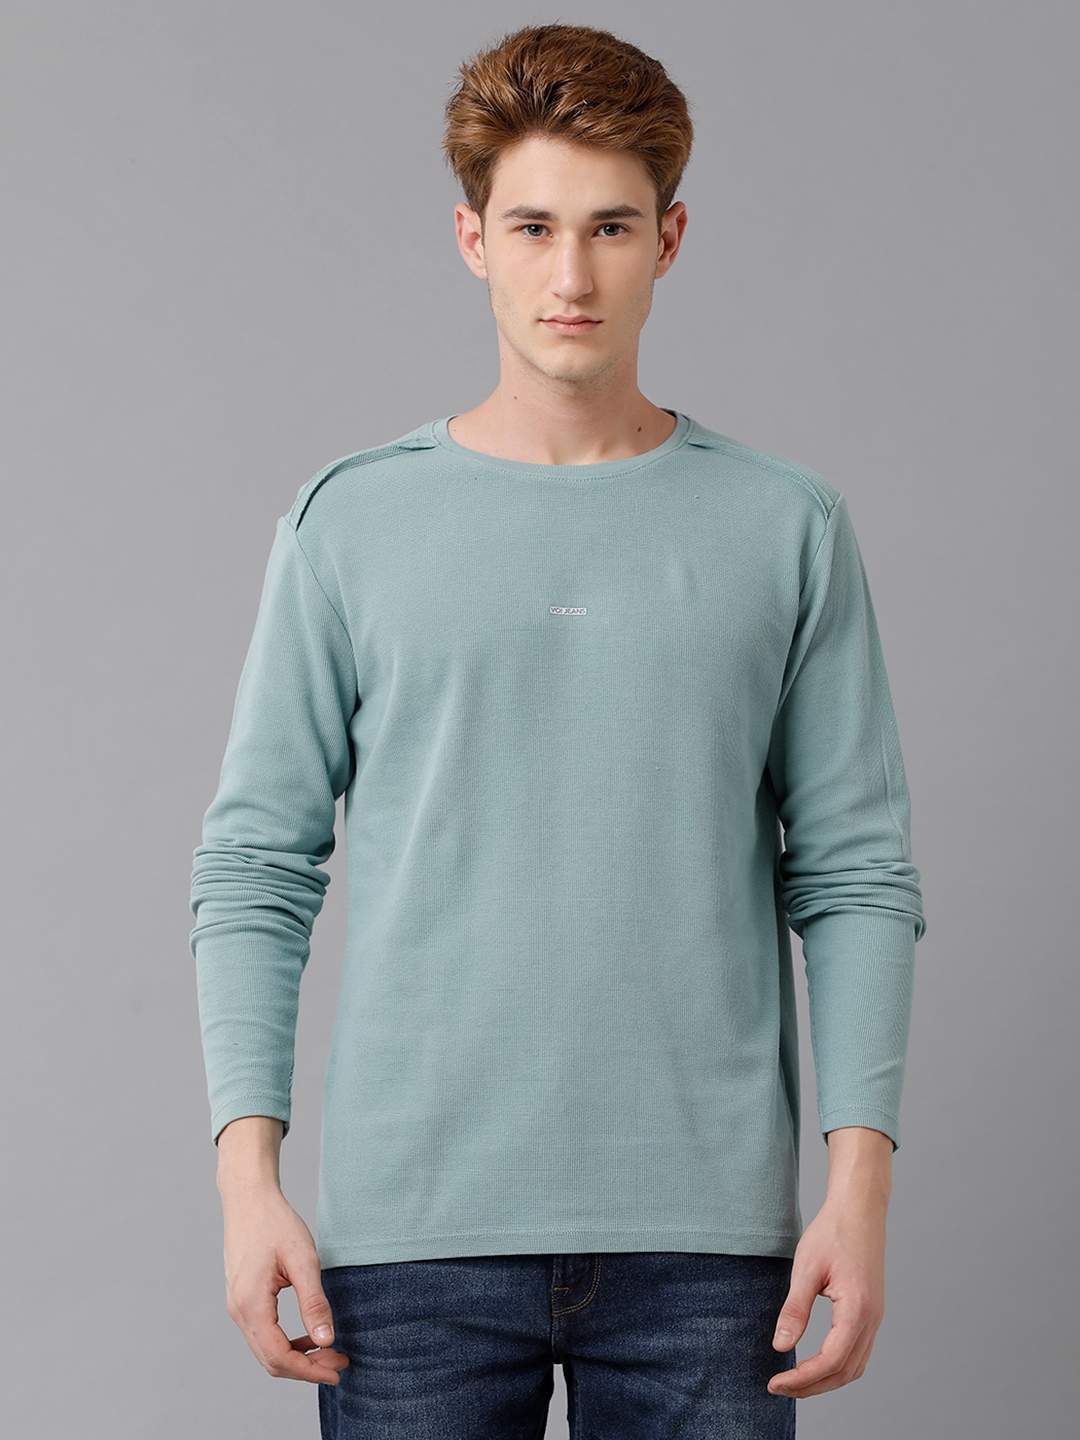 VOI JEANS Men's Solid Blue Cotton Blend Full Sleeved Regular Fit T-Shirt